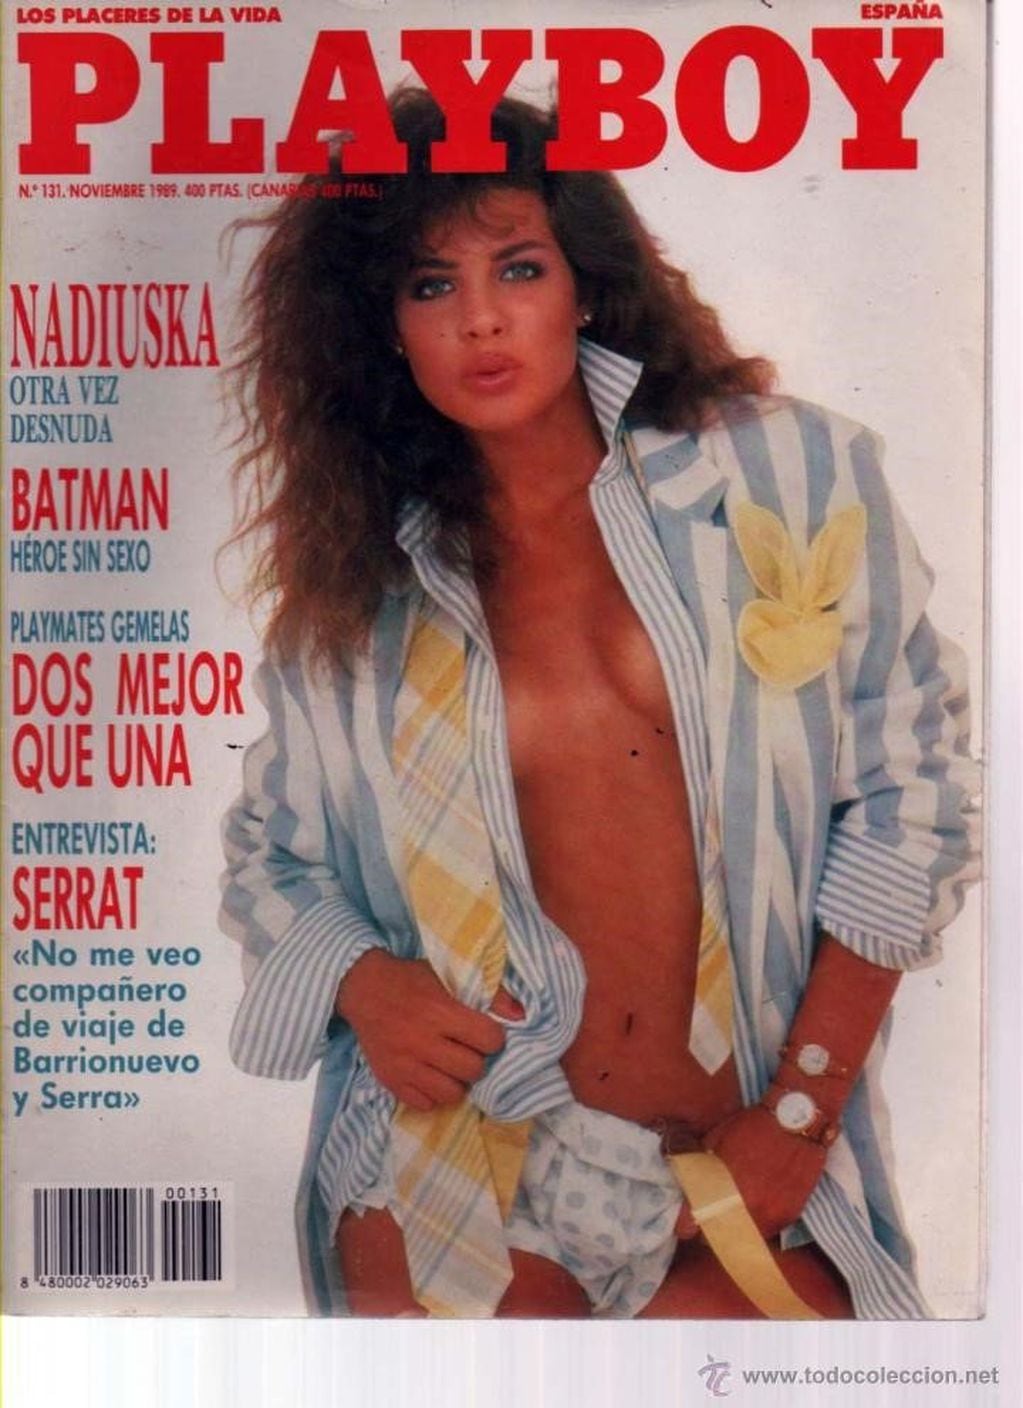 Nadiuska posó para Playboy en 1977.